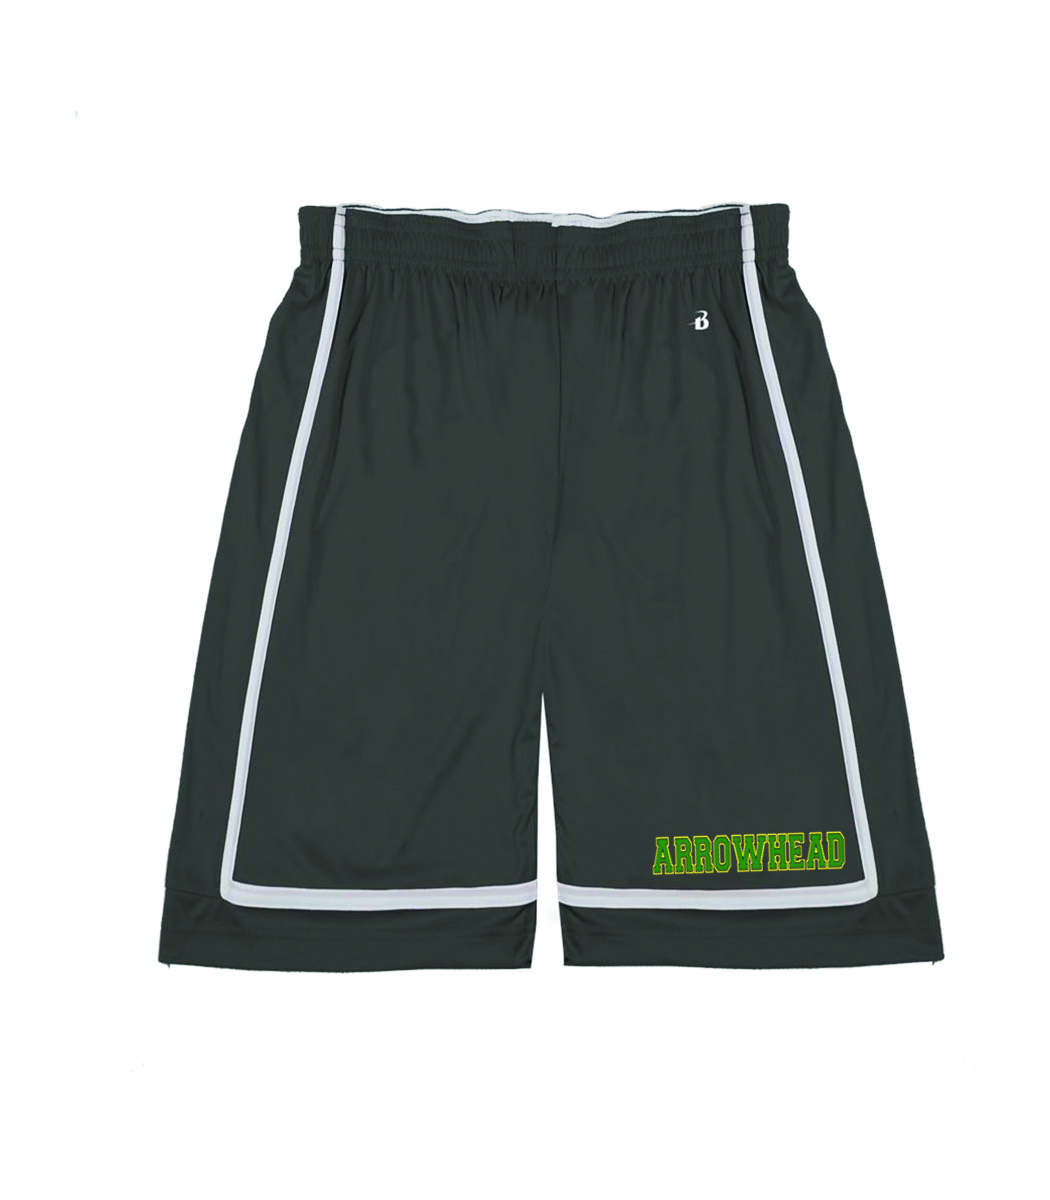 Badger B Core B-Line Reversible Shorts